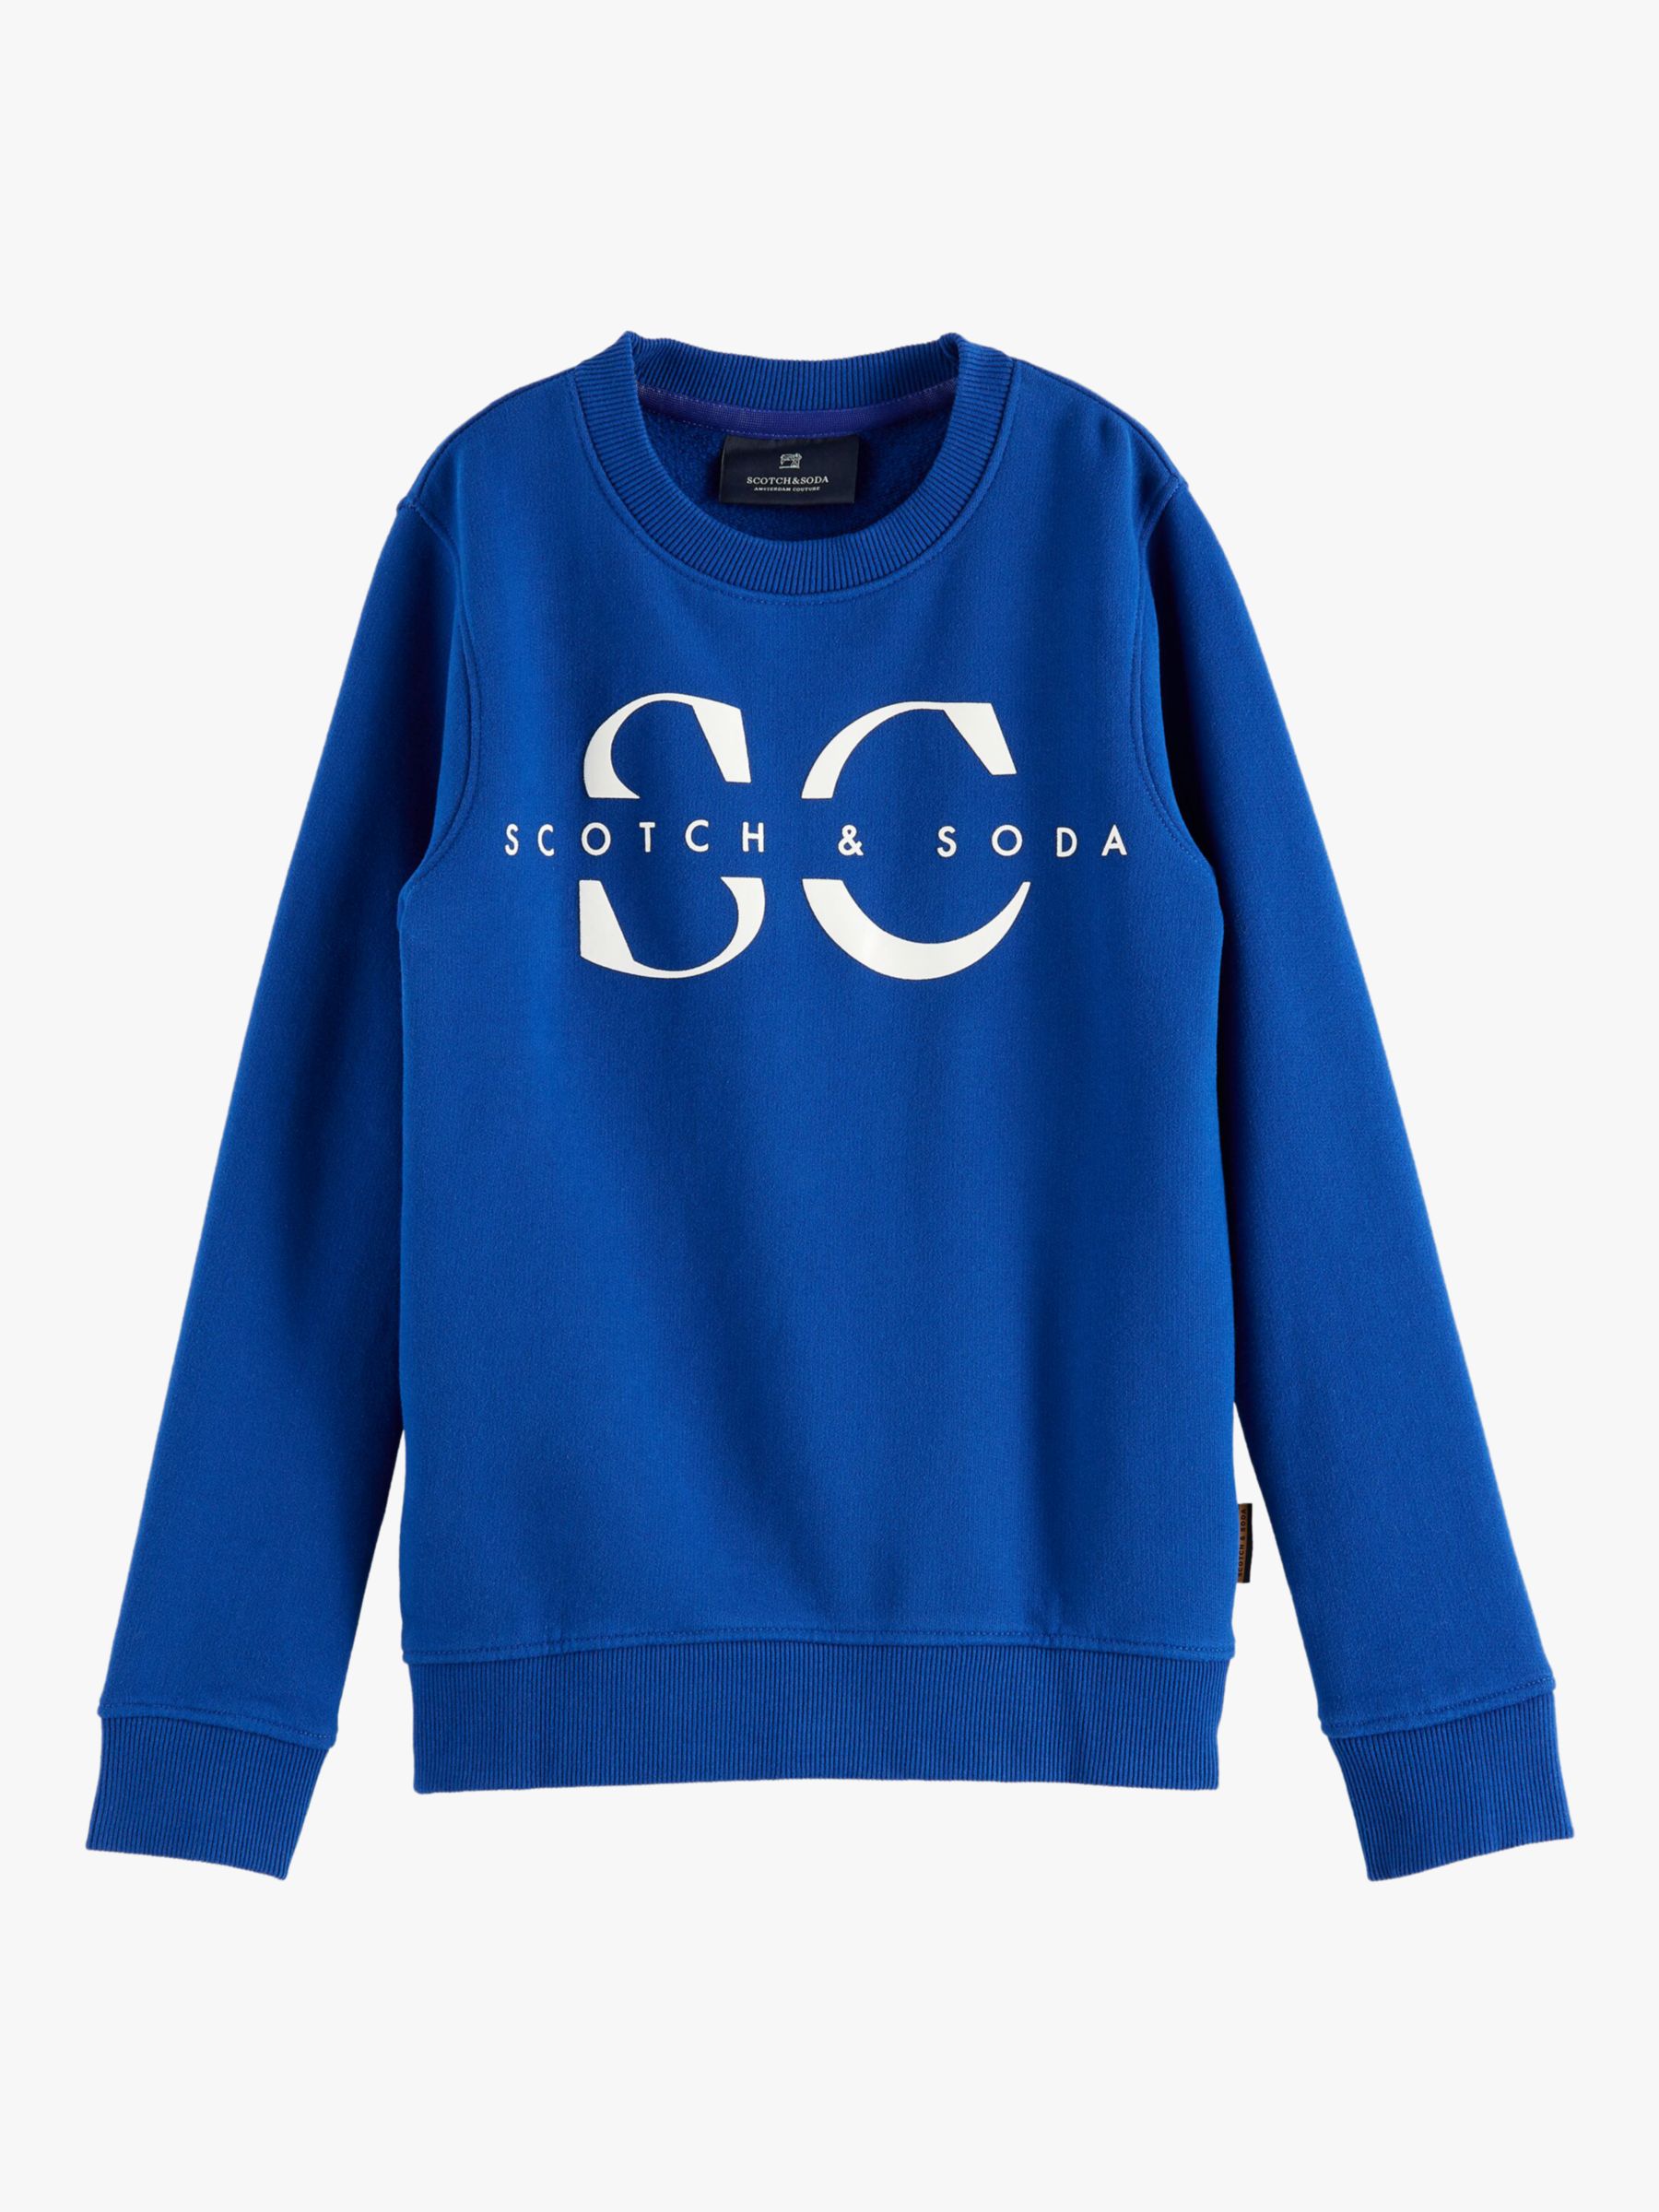 Scotch & Soda Kids' Logo Sweatshirt, Bright Blue